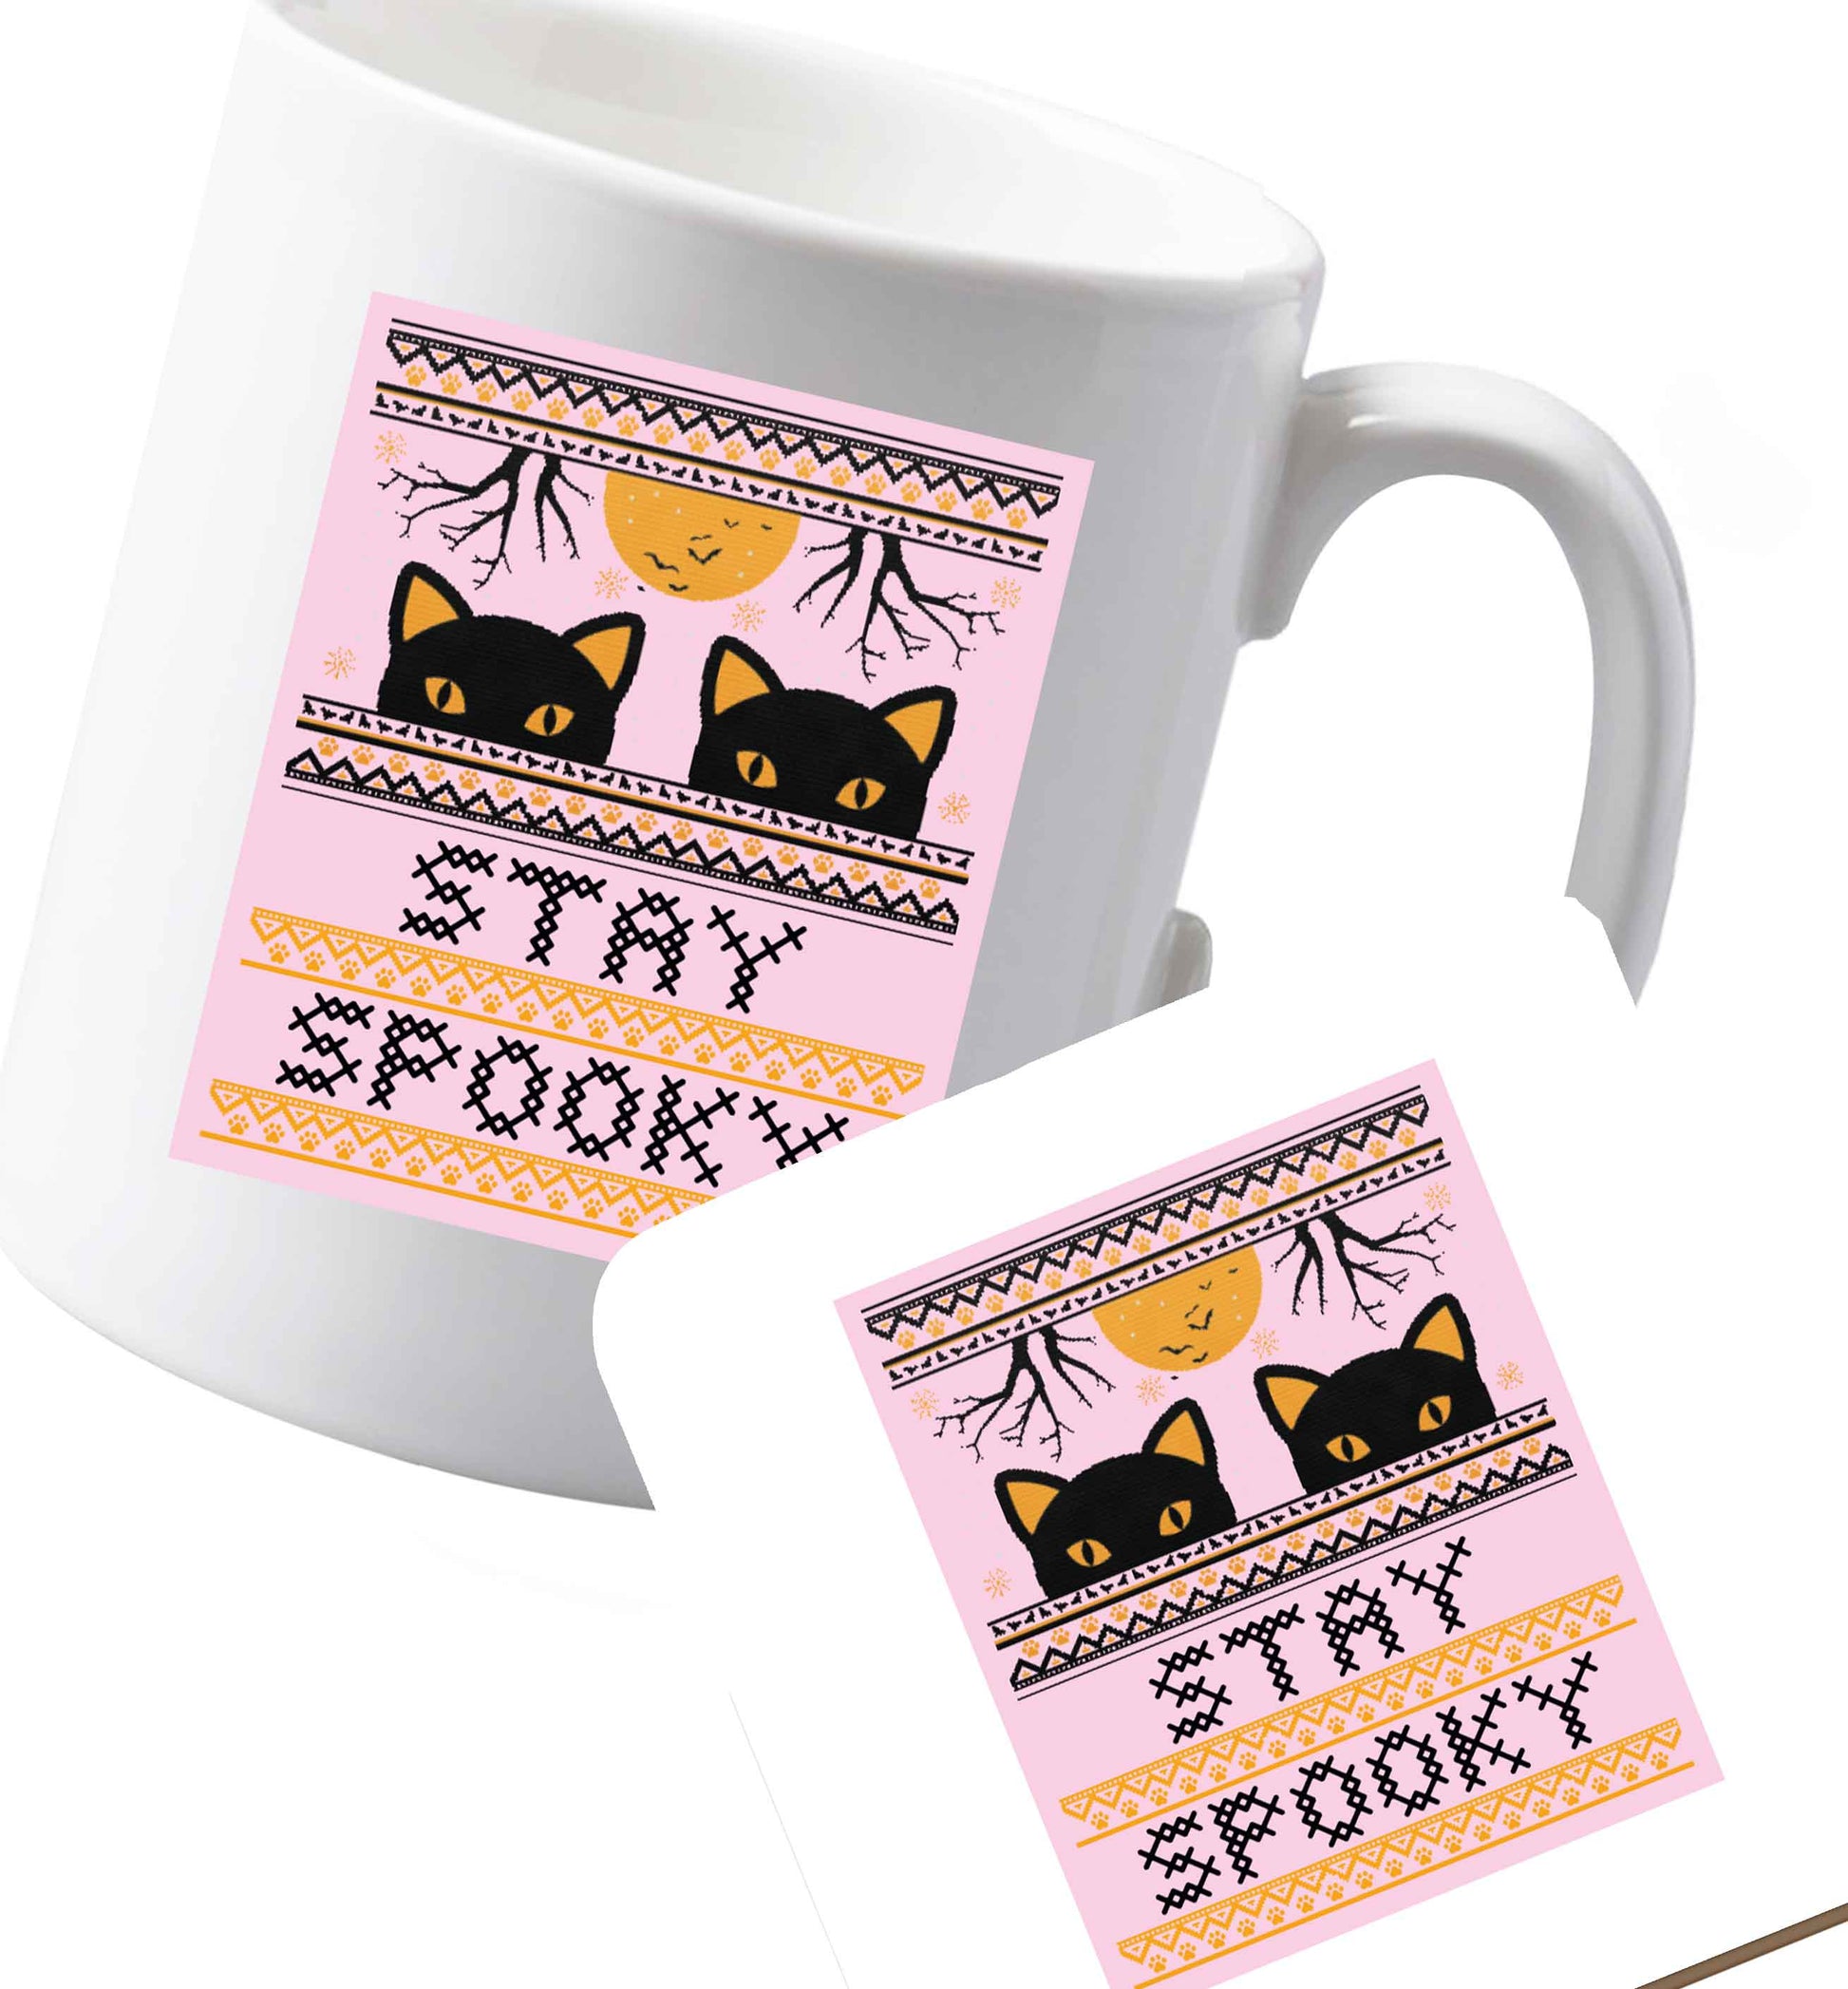 10 oz Ceramic mug and coaster Stay spooky both sides